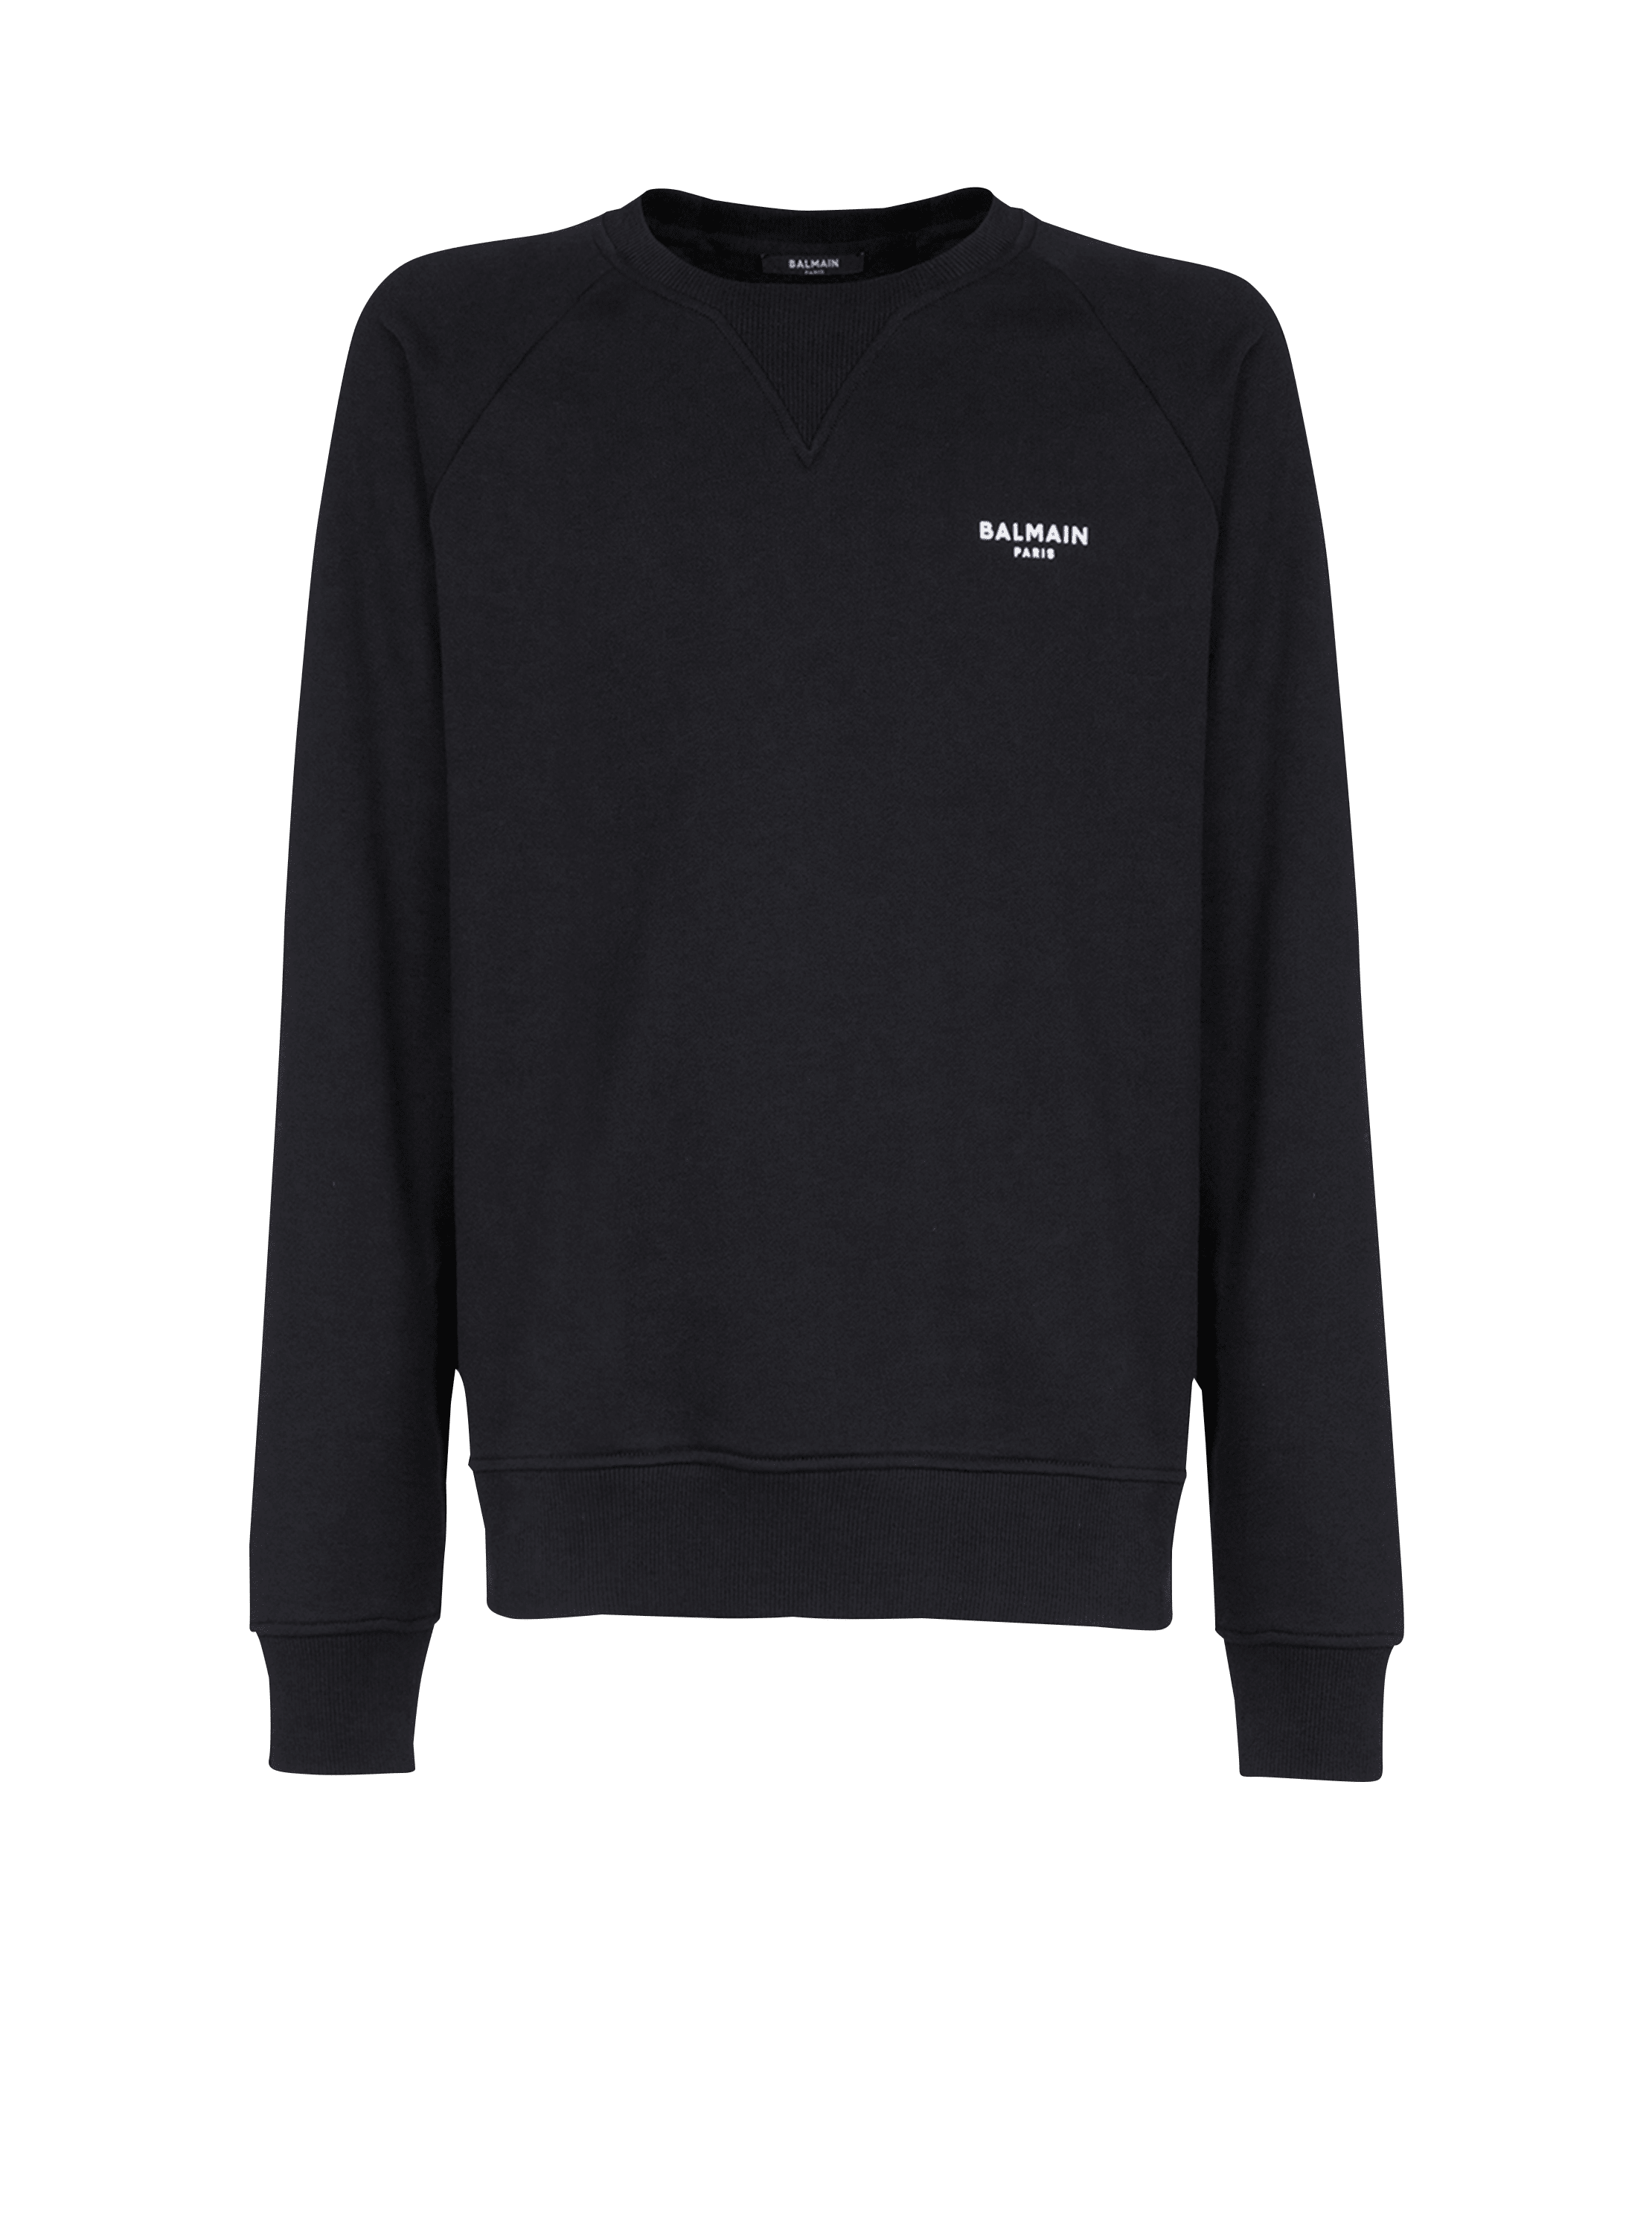 Flocked Balmain sweatshirt, black, hi-res